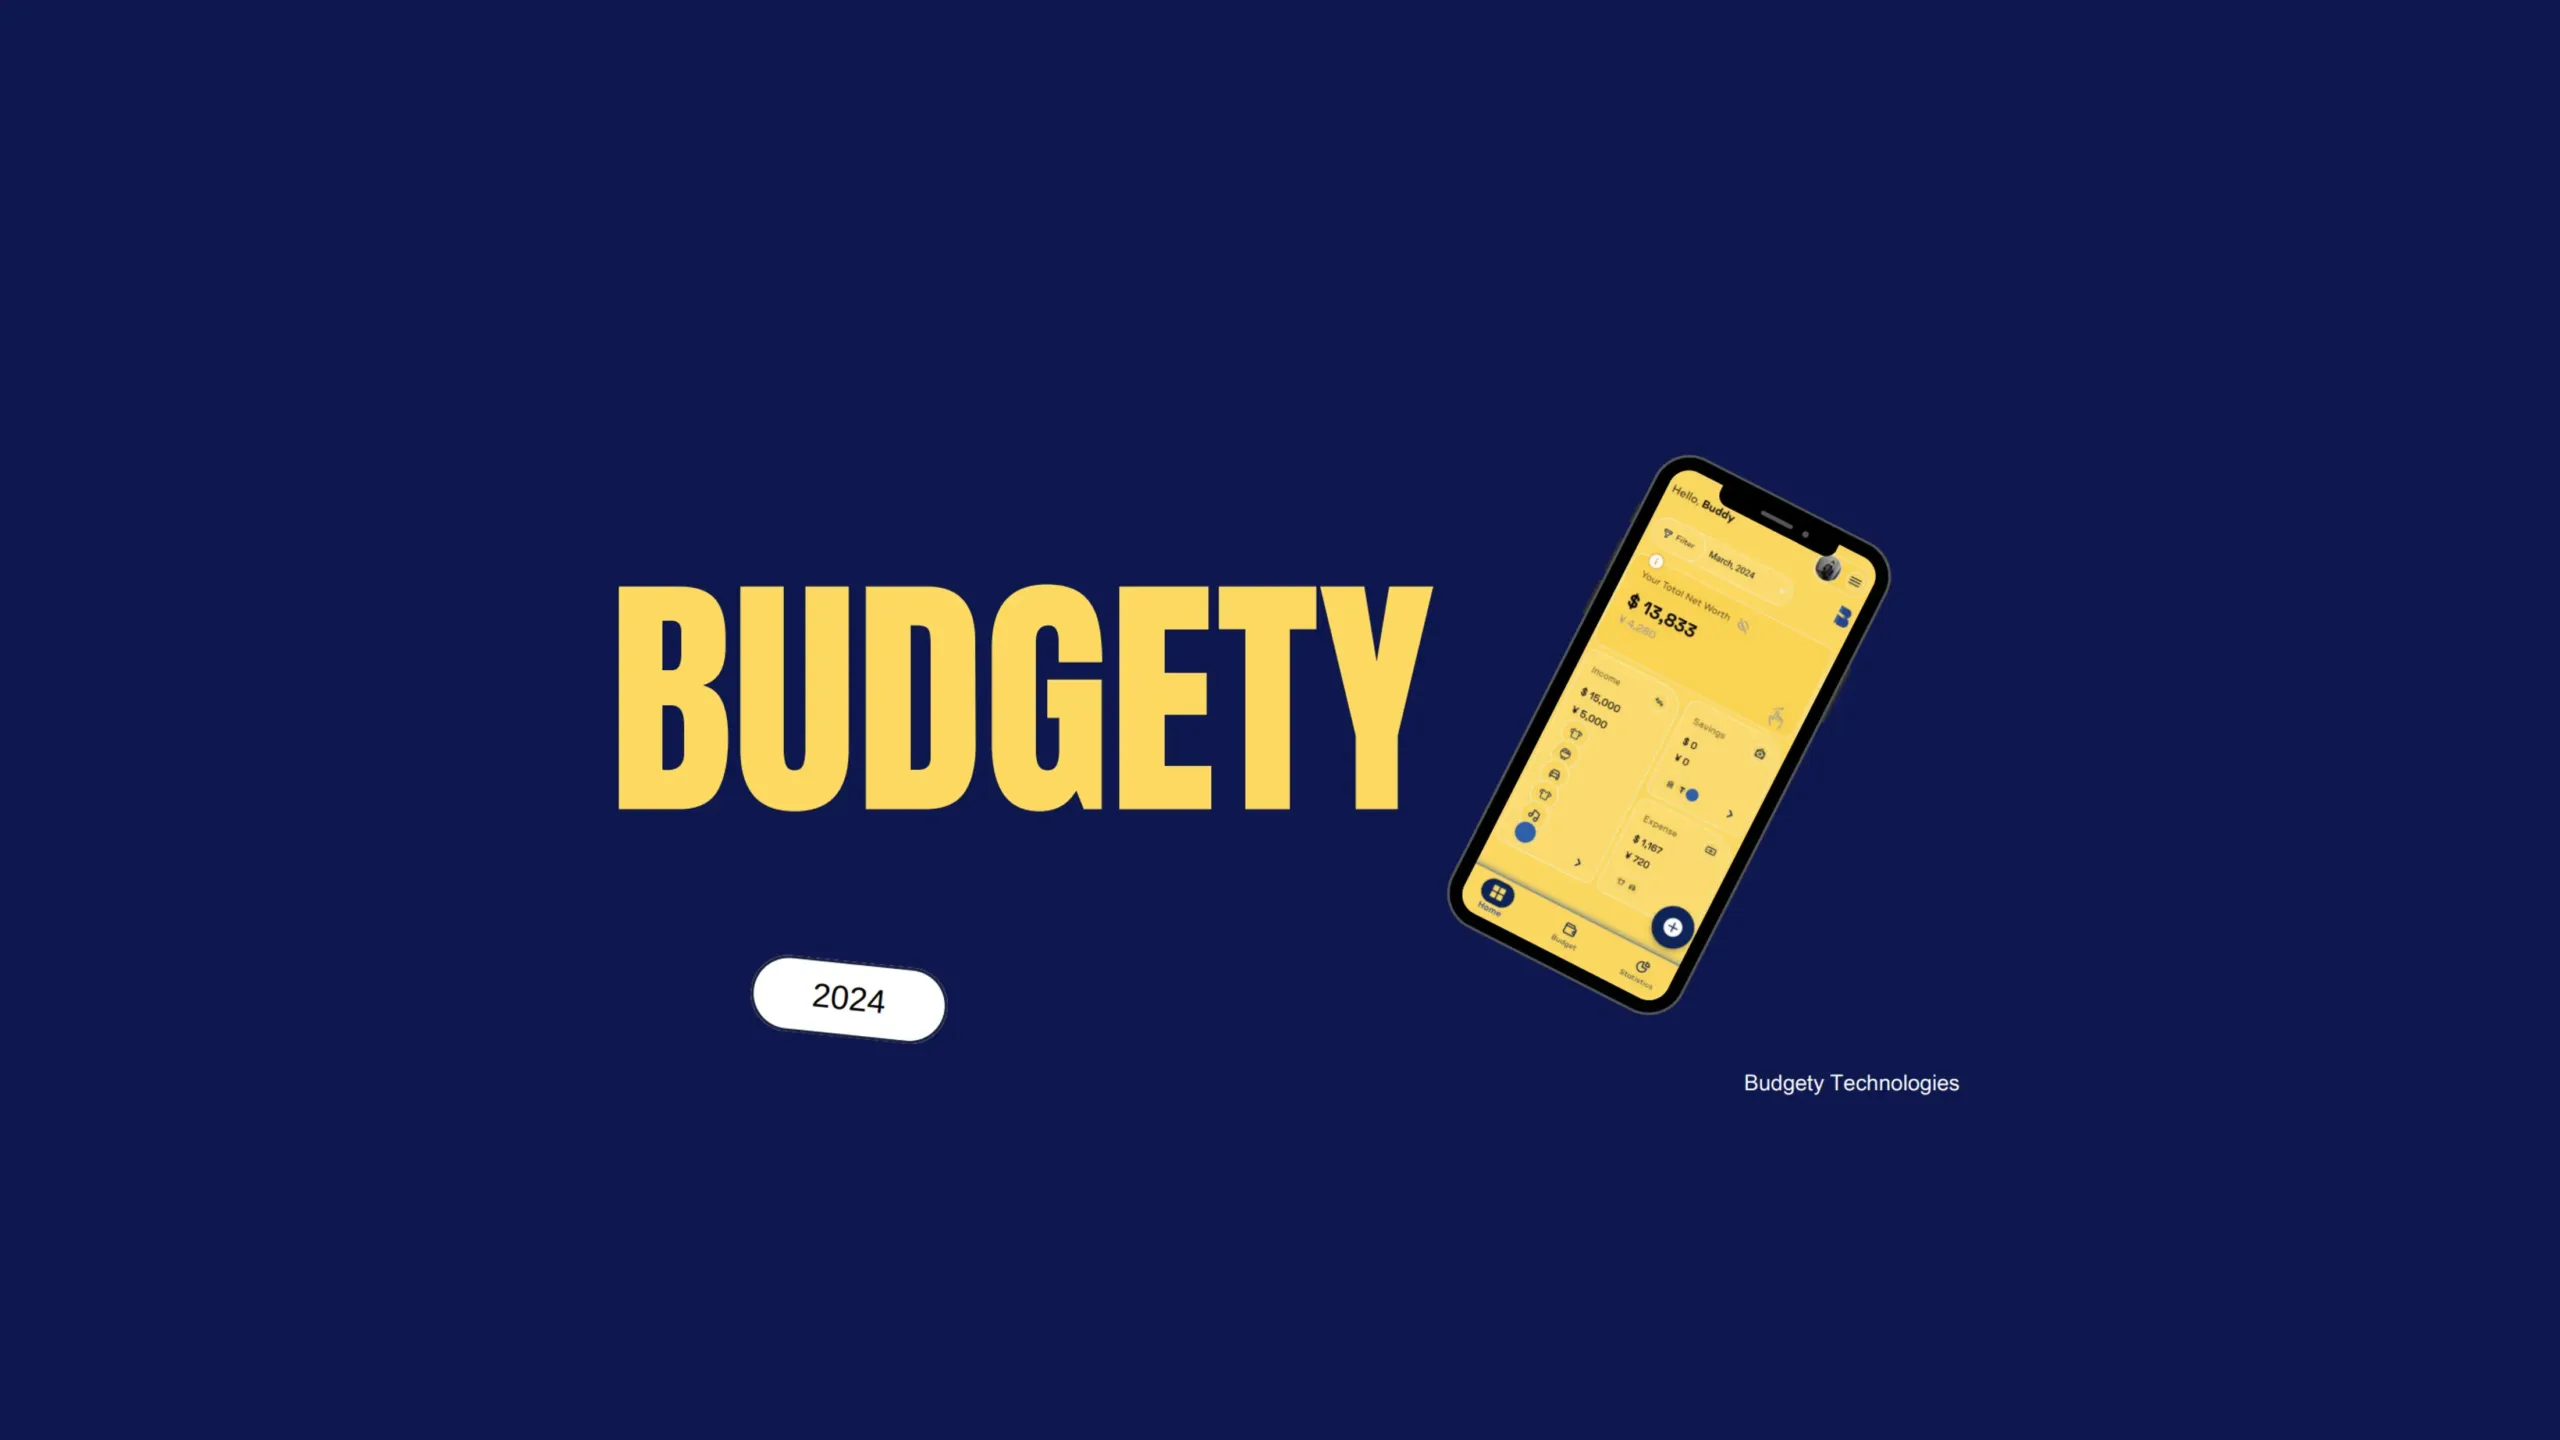  UCW student develops budgeting app